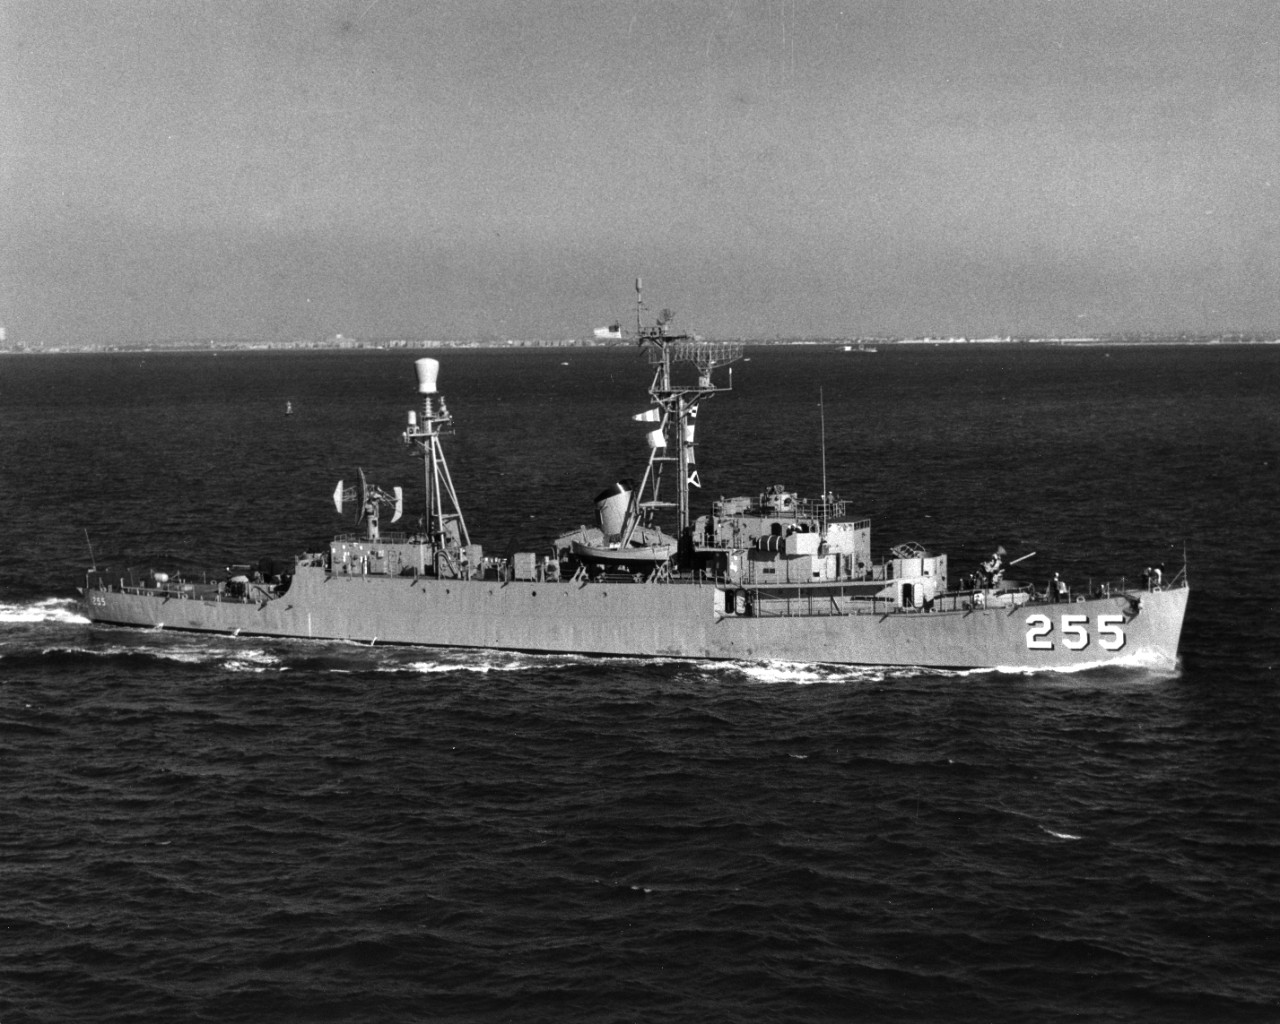 USS Sellstrom (DER-255), after conversion to a radar picket escort ship.